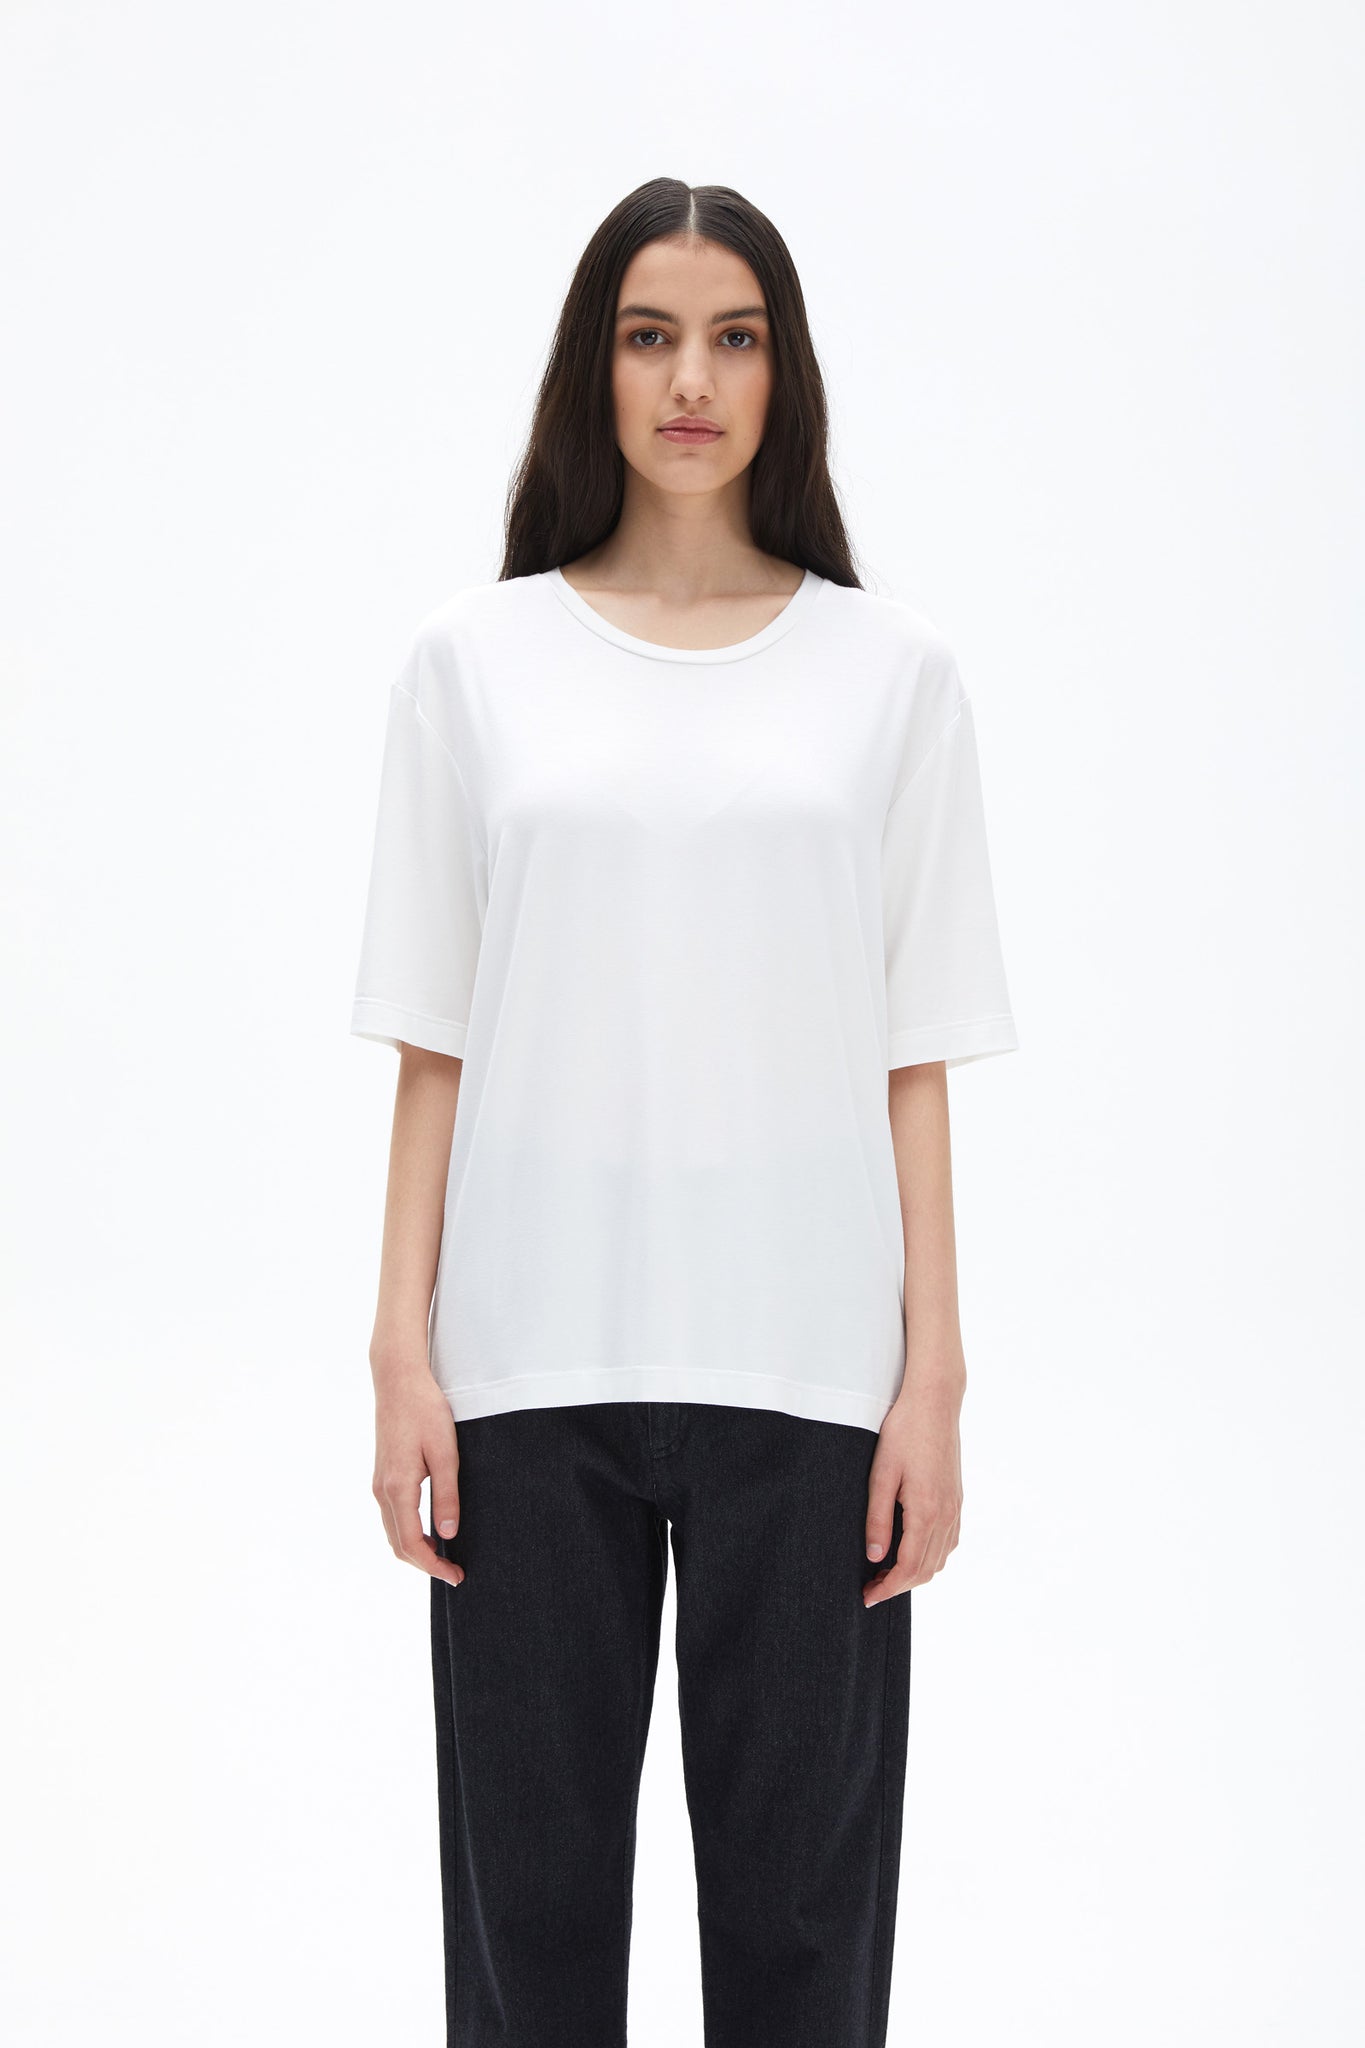 Glan t-shirt off-white